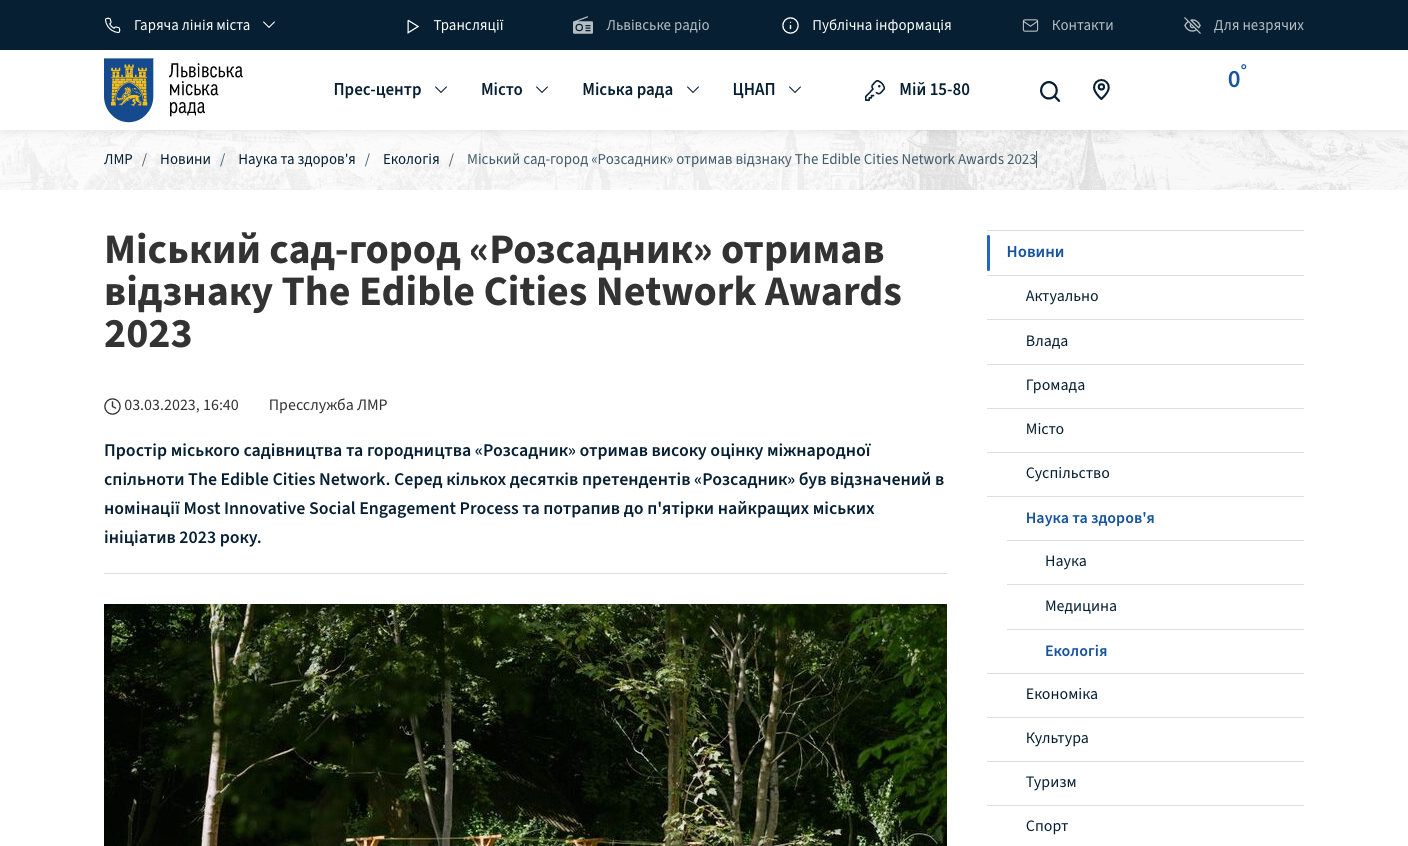 Roszadnyk urban garden received the distinction of The Edible Cities Network Awards 2023